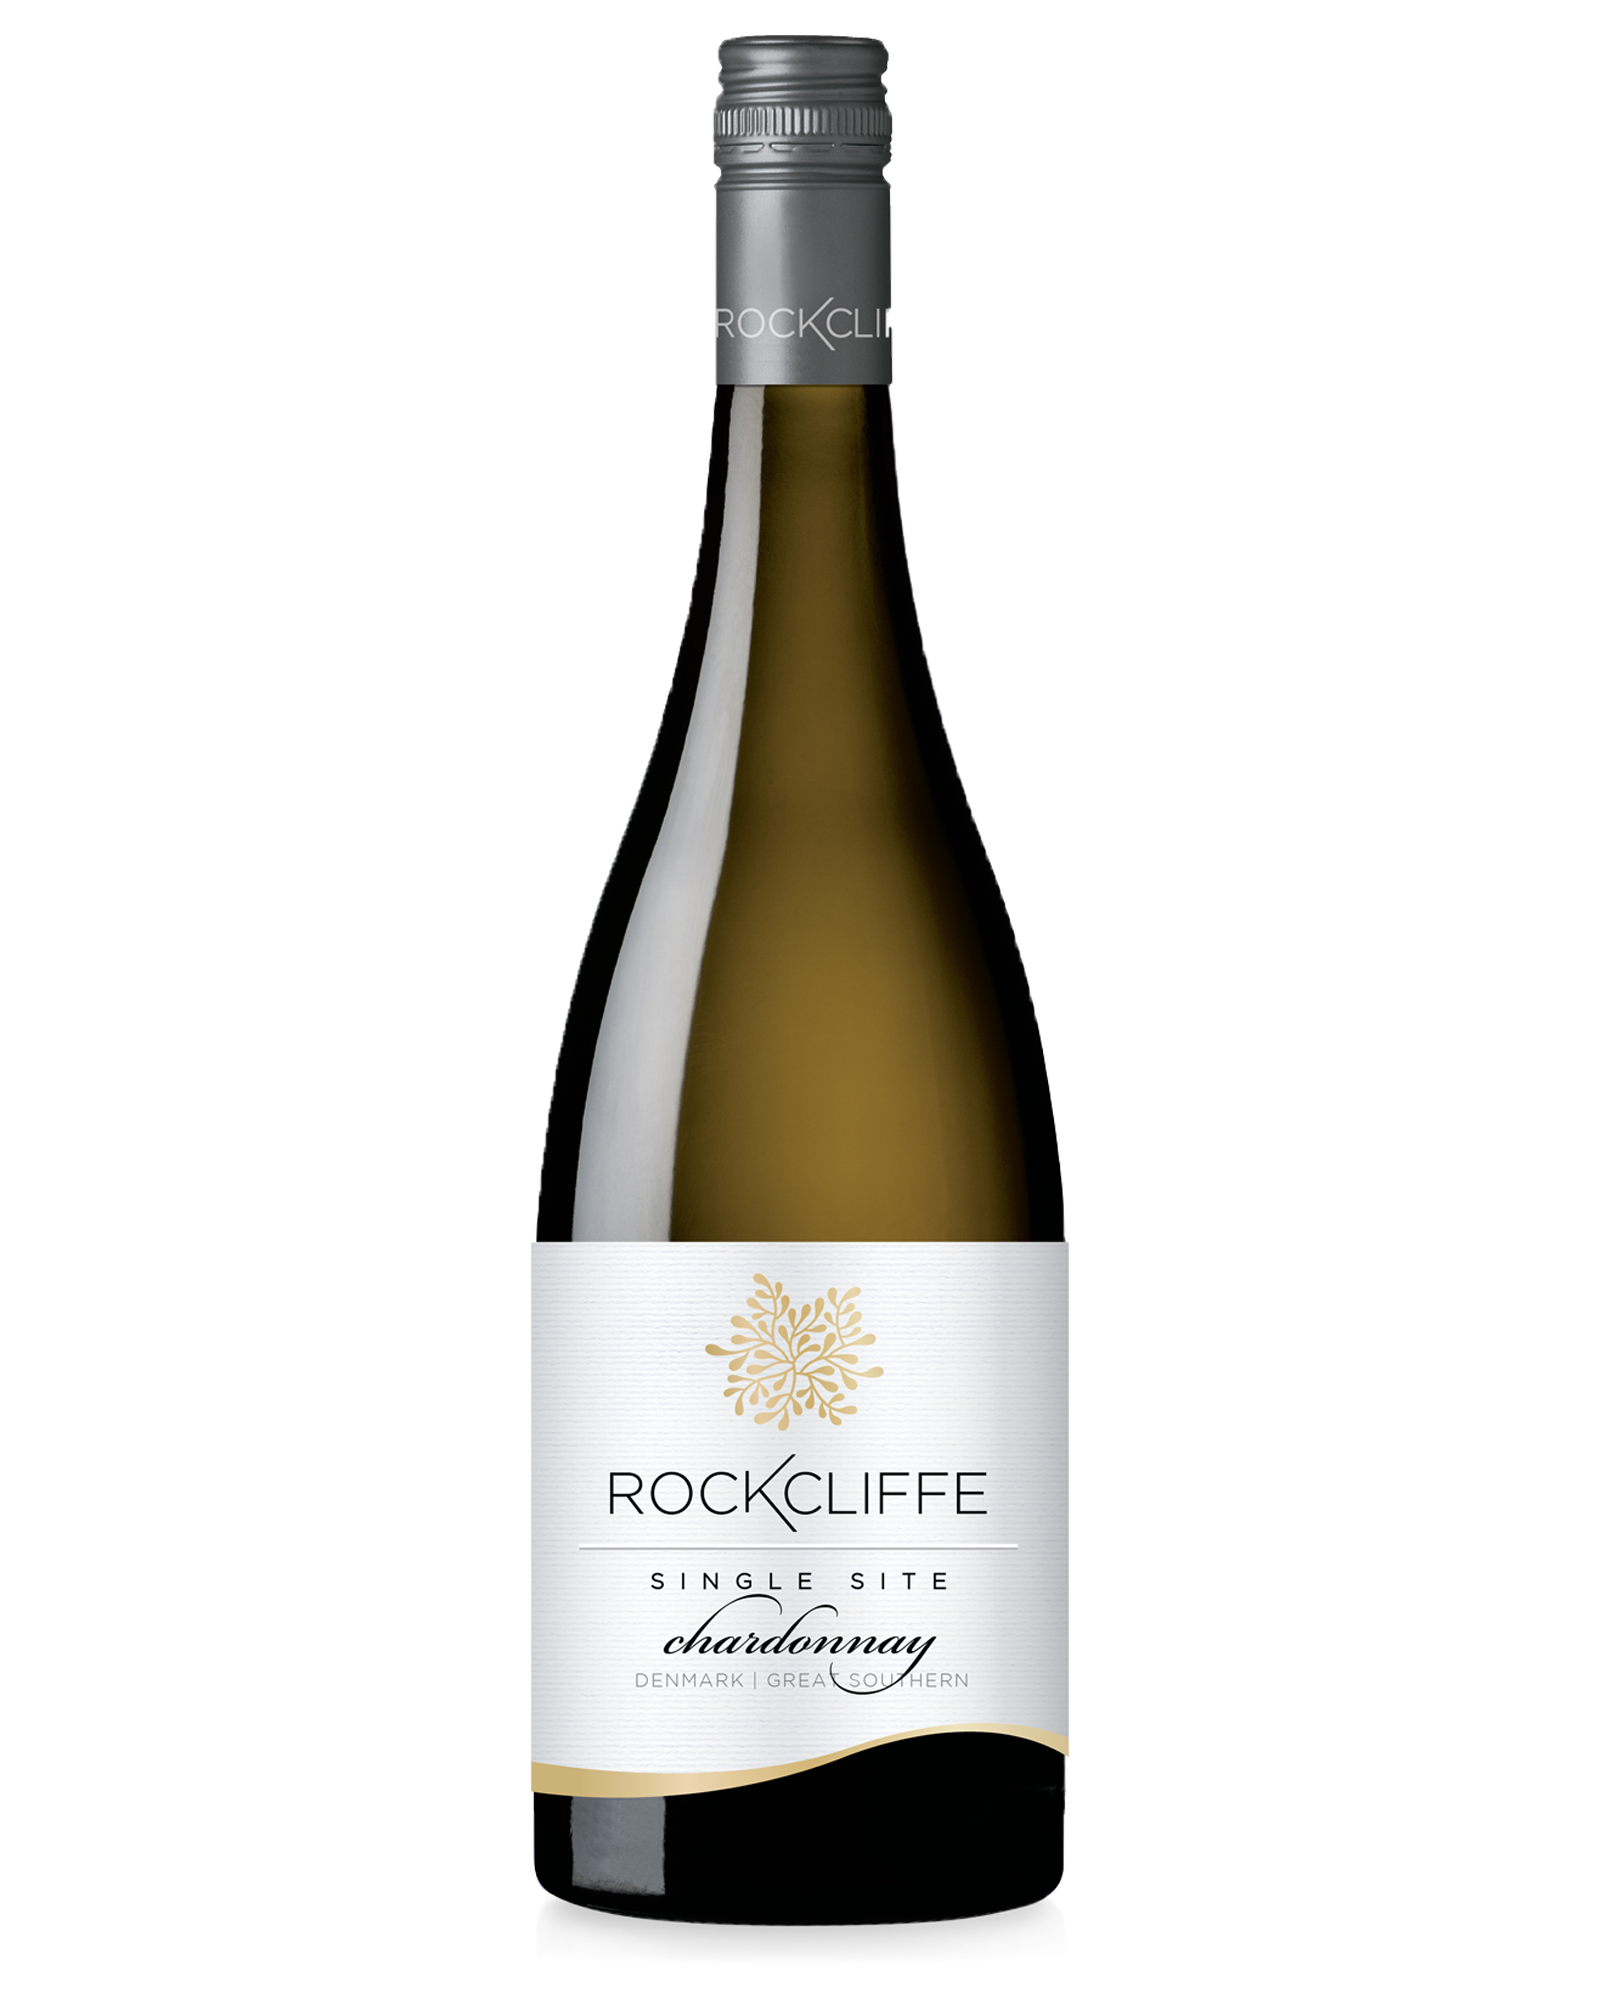 Rockcliffe Singlesite Chardonnay 2017